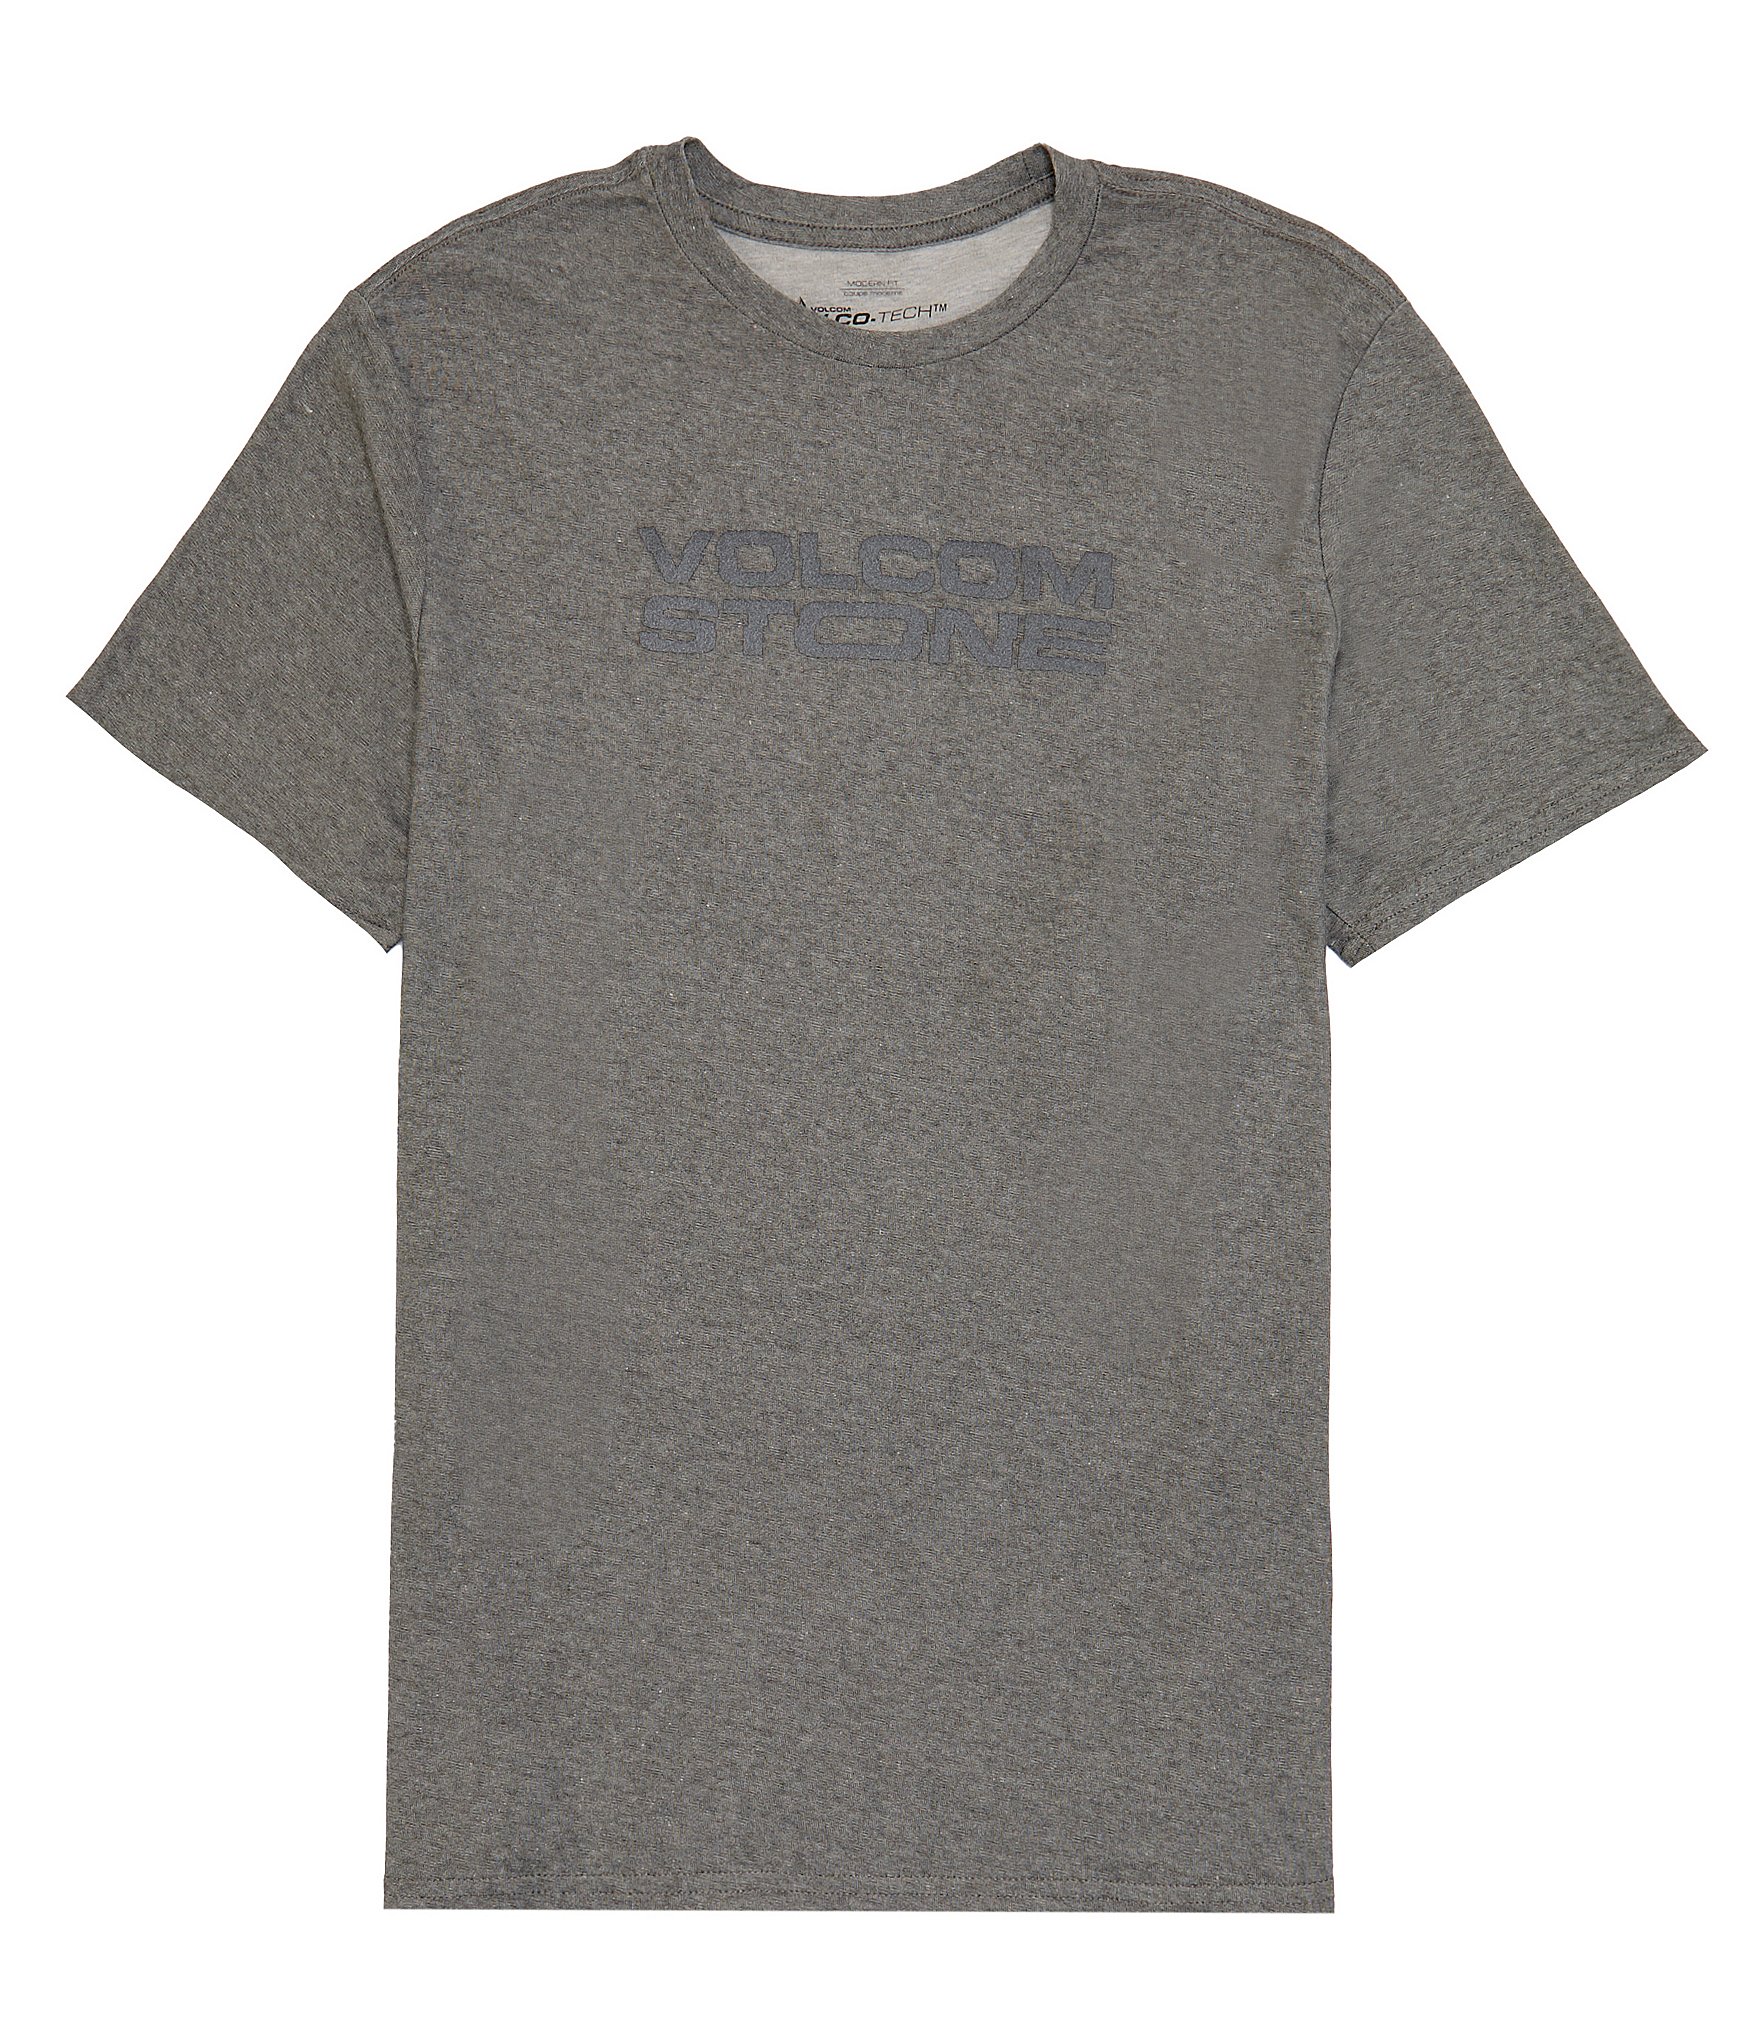 Volcom Euroslash Tech Short Sleeve T-Shirt | Dillard's